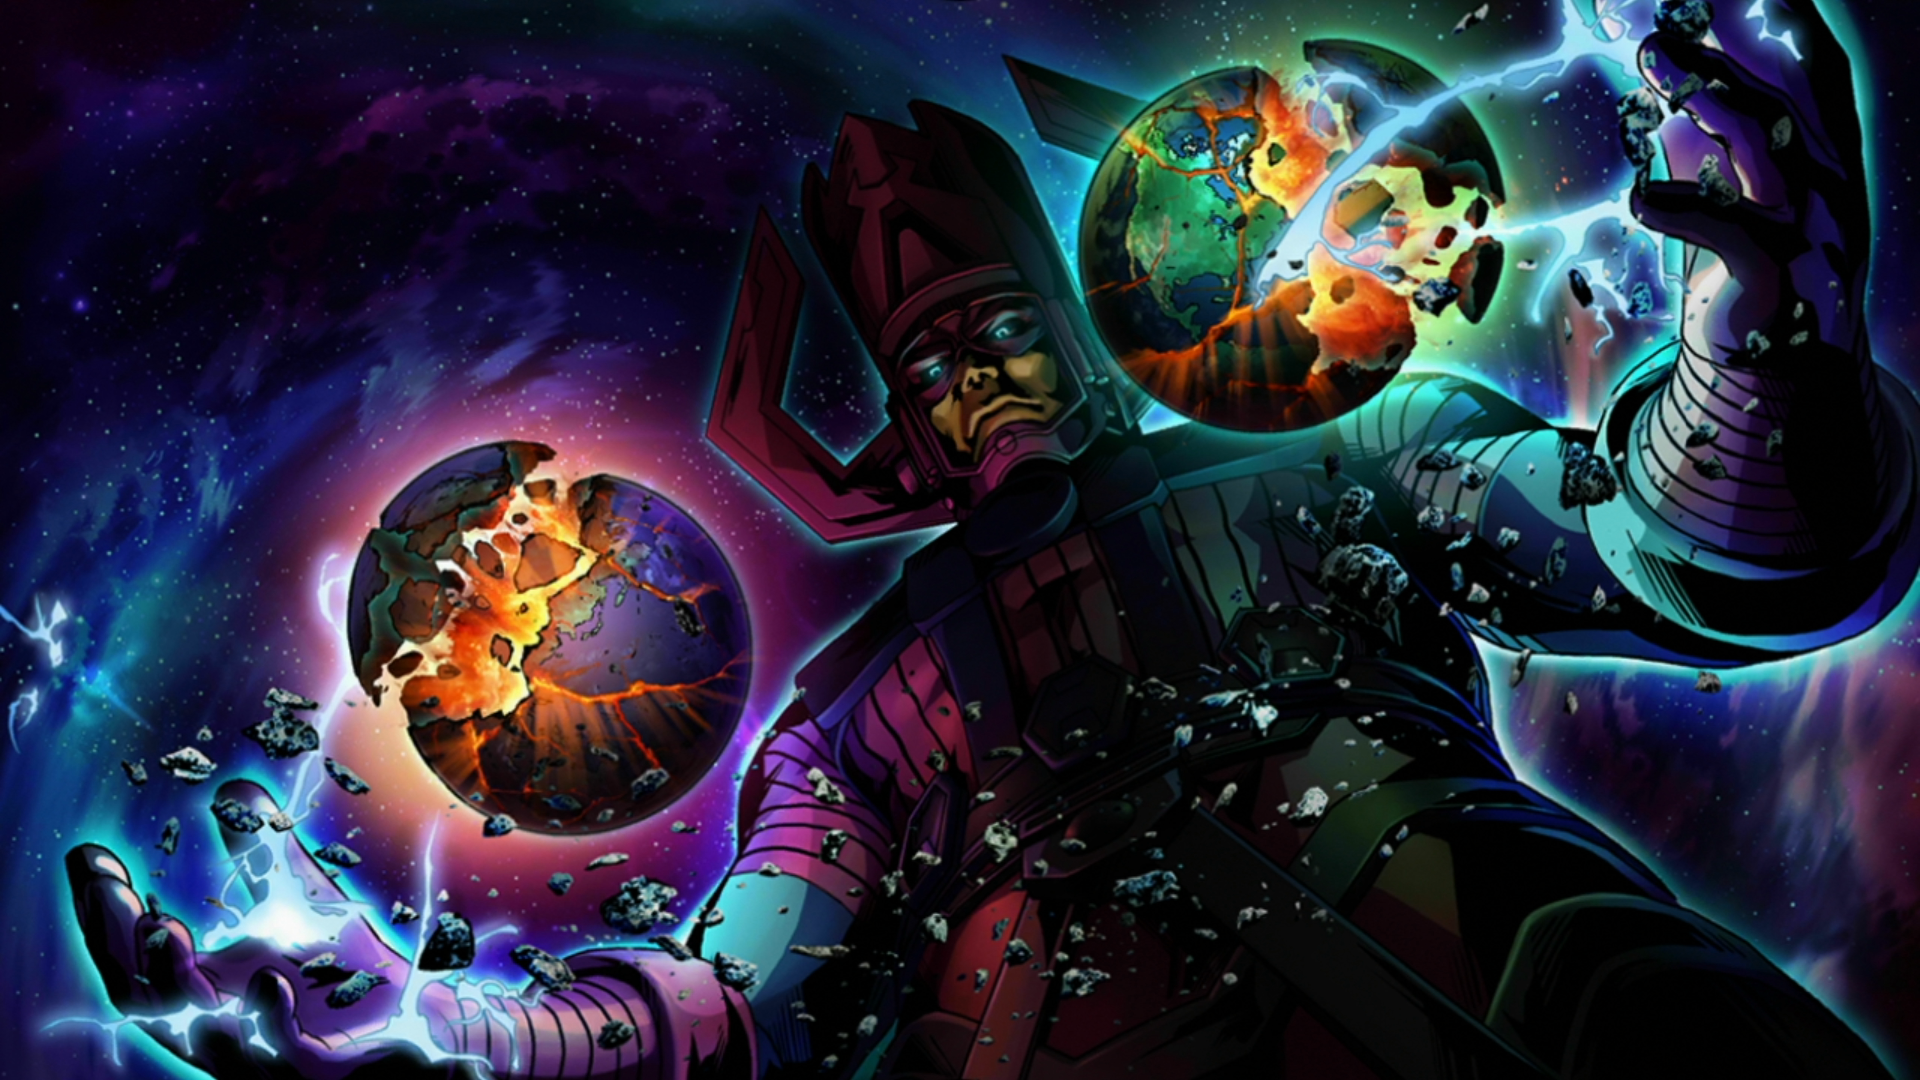 Composite Galactus (Marvel) vs Othinus (Toaru)